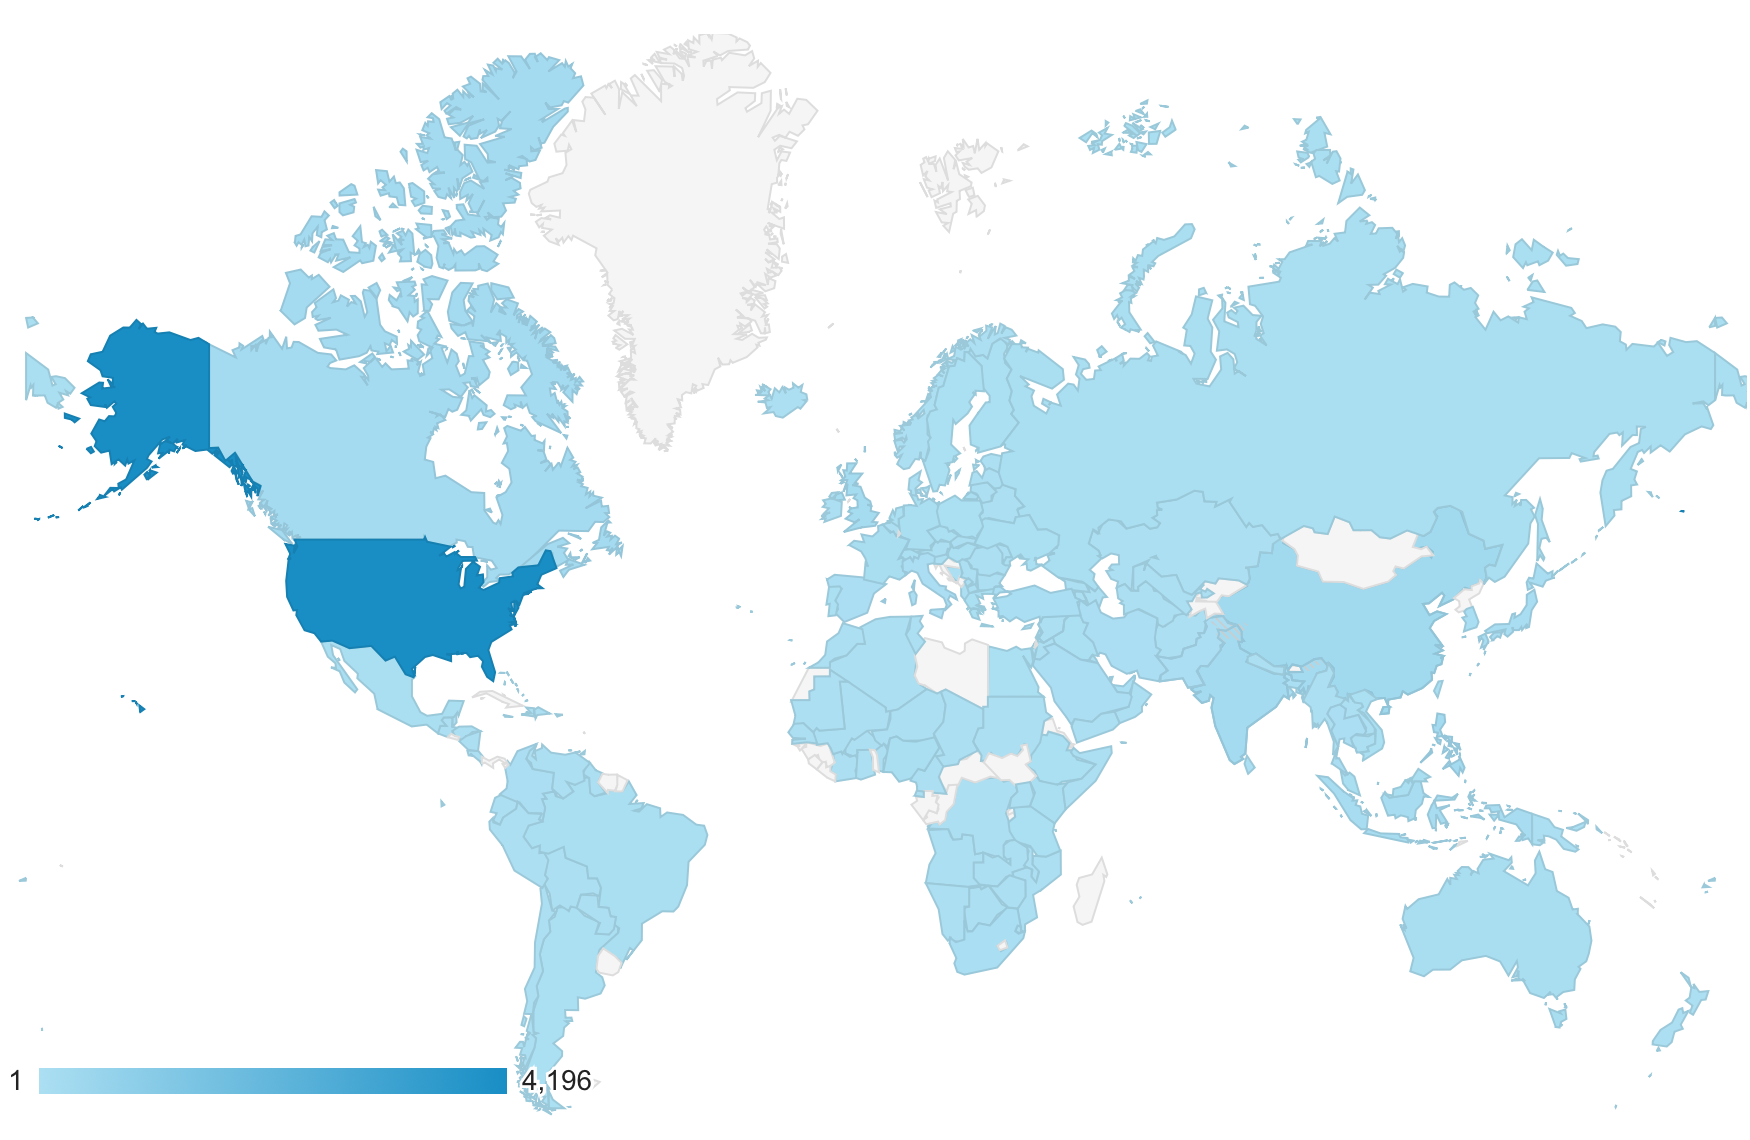 Google Analytics data on Pediatric Ethicscope worldwide readership